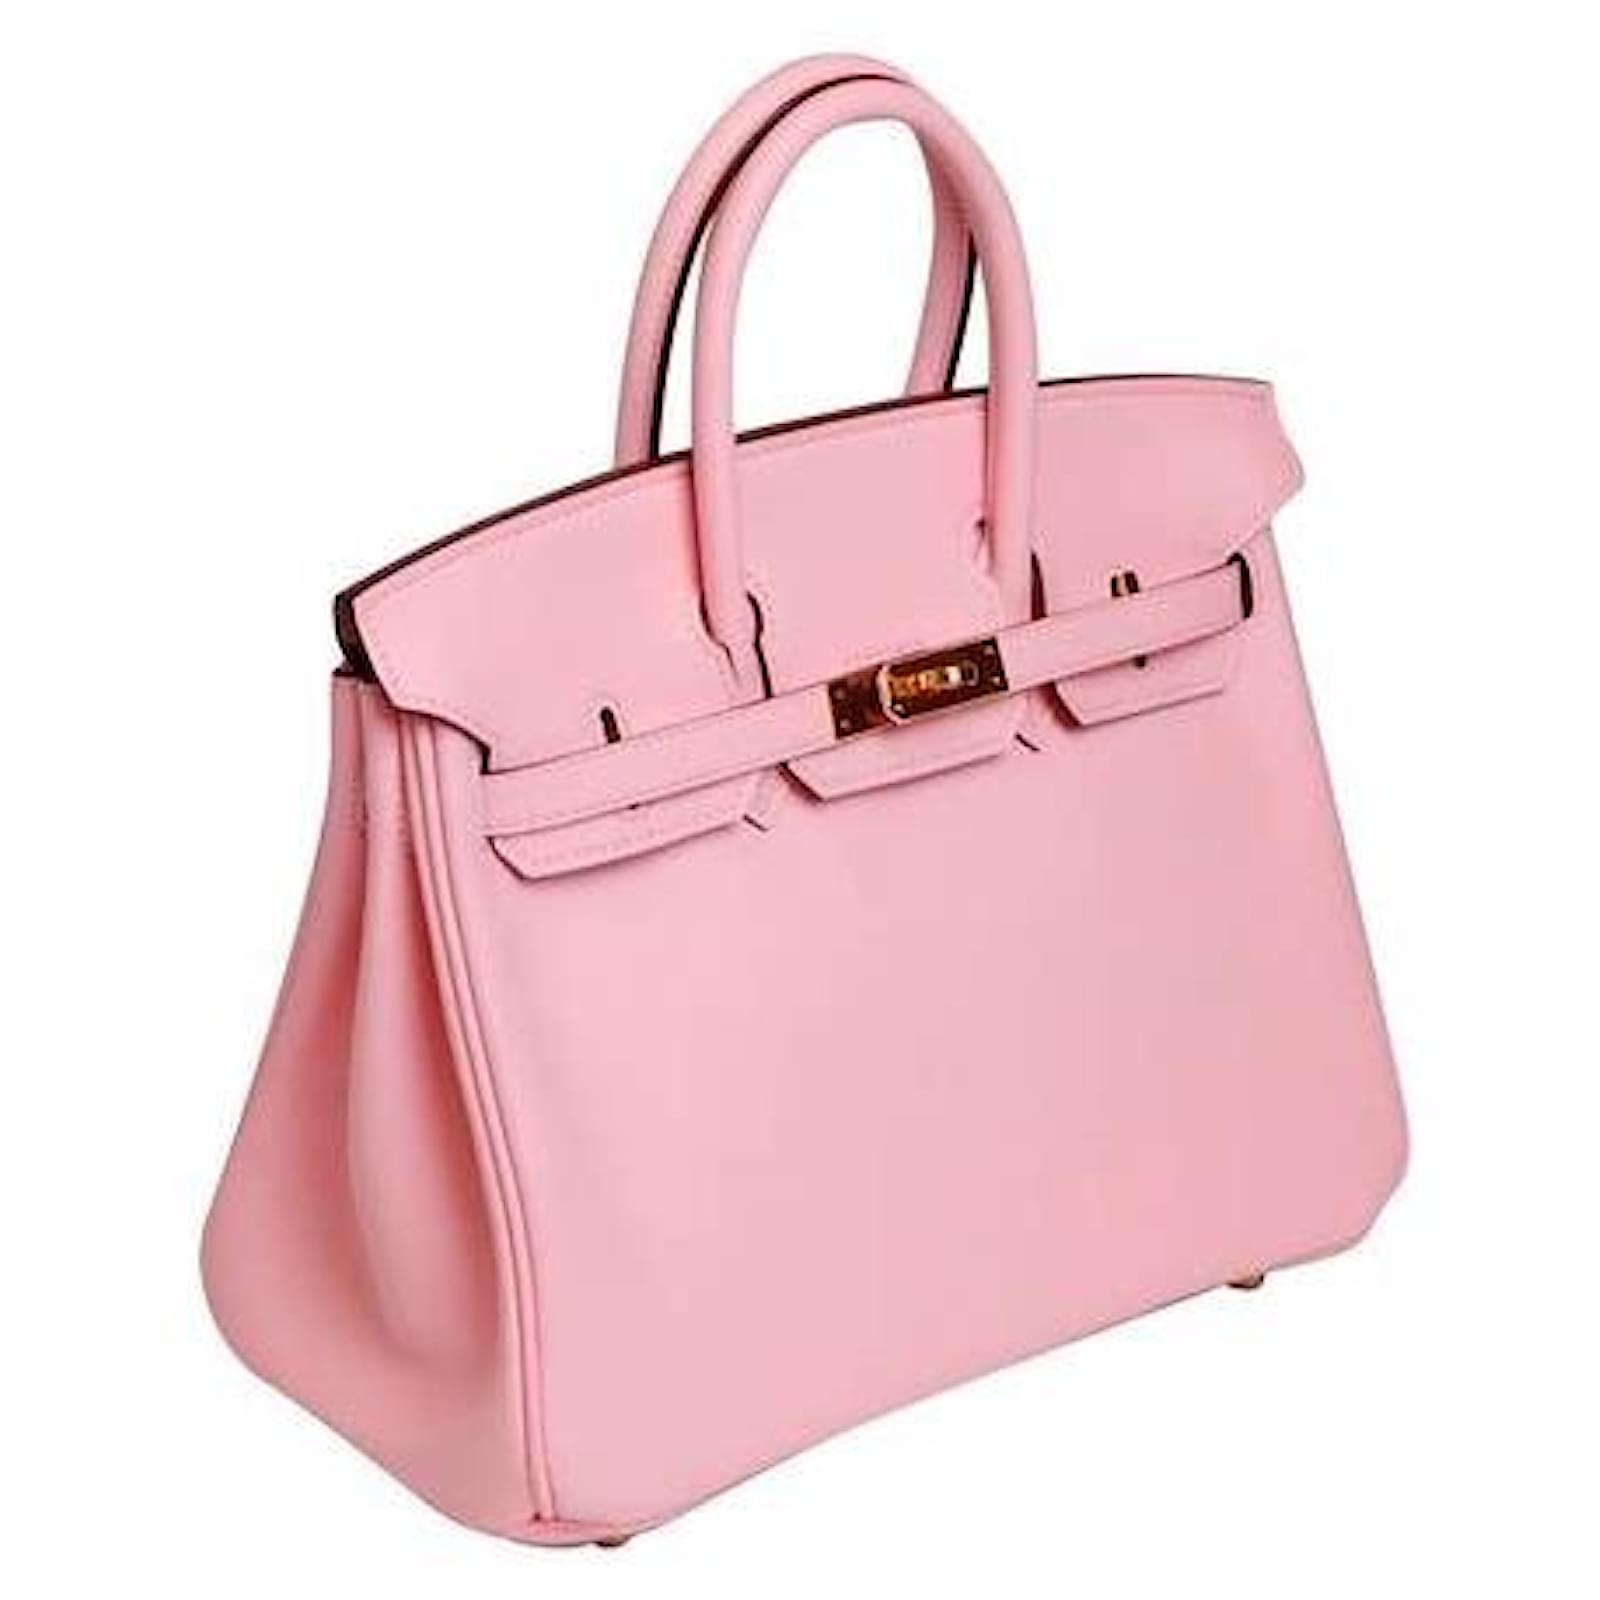 Hermès Birkin 30 Swift Leather Handbag